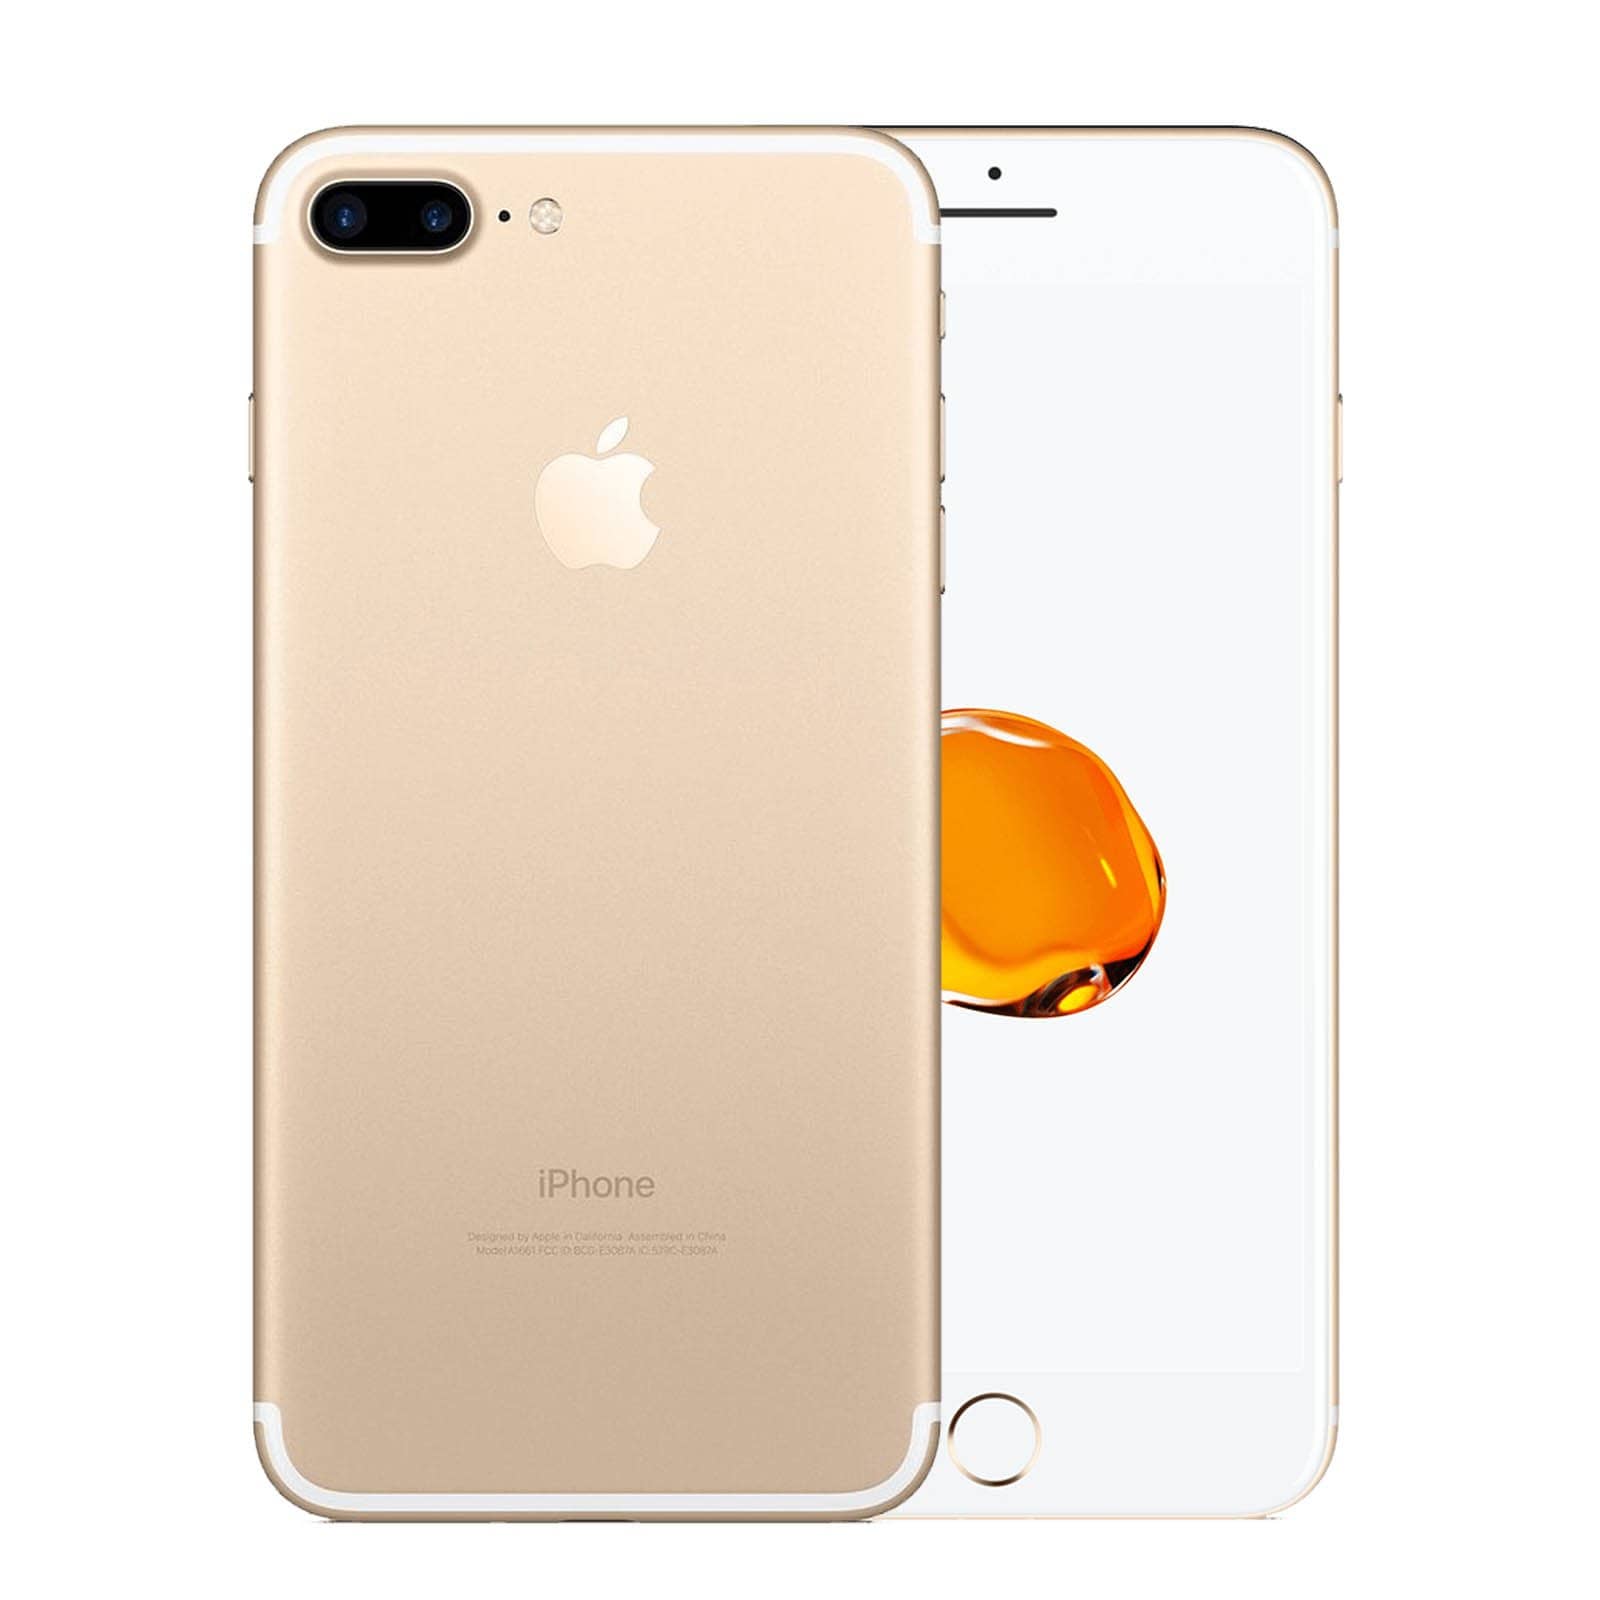 Apple iPhone 7 Plus 256GB Gold Very Good - Unlocked